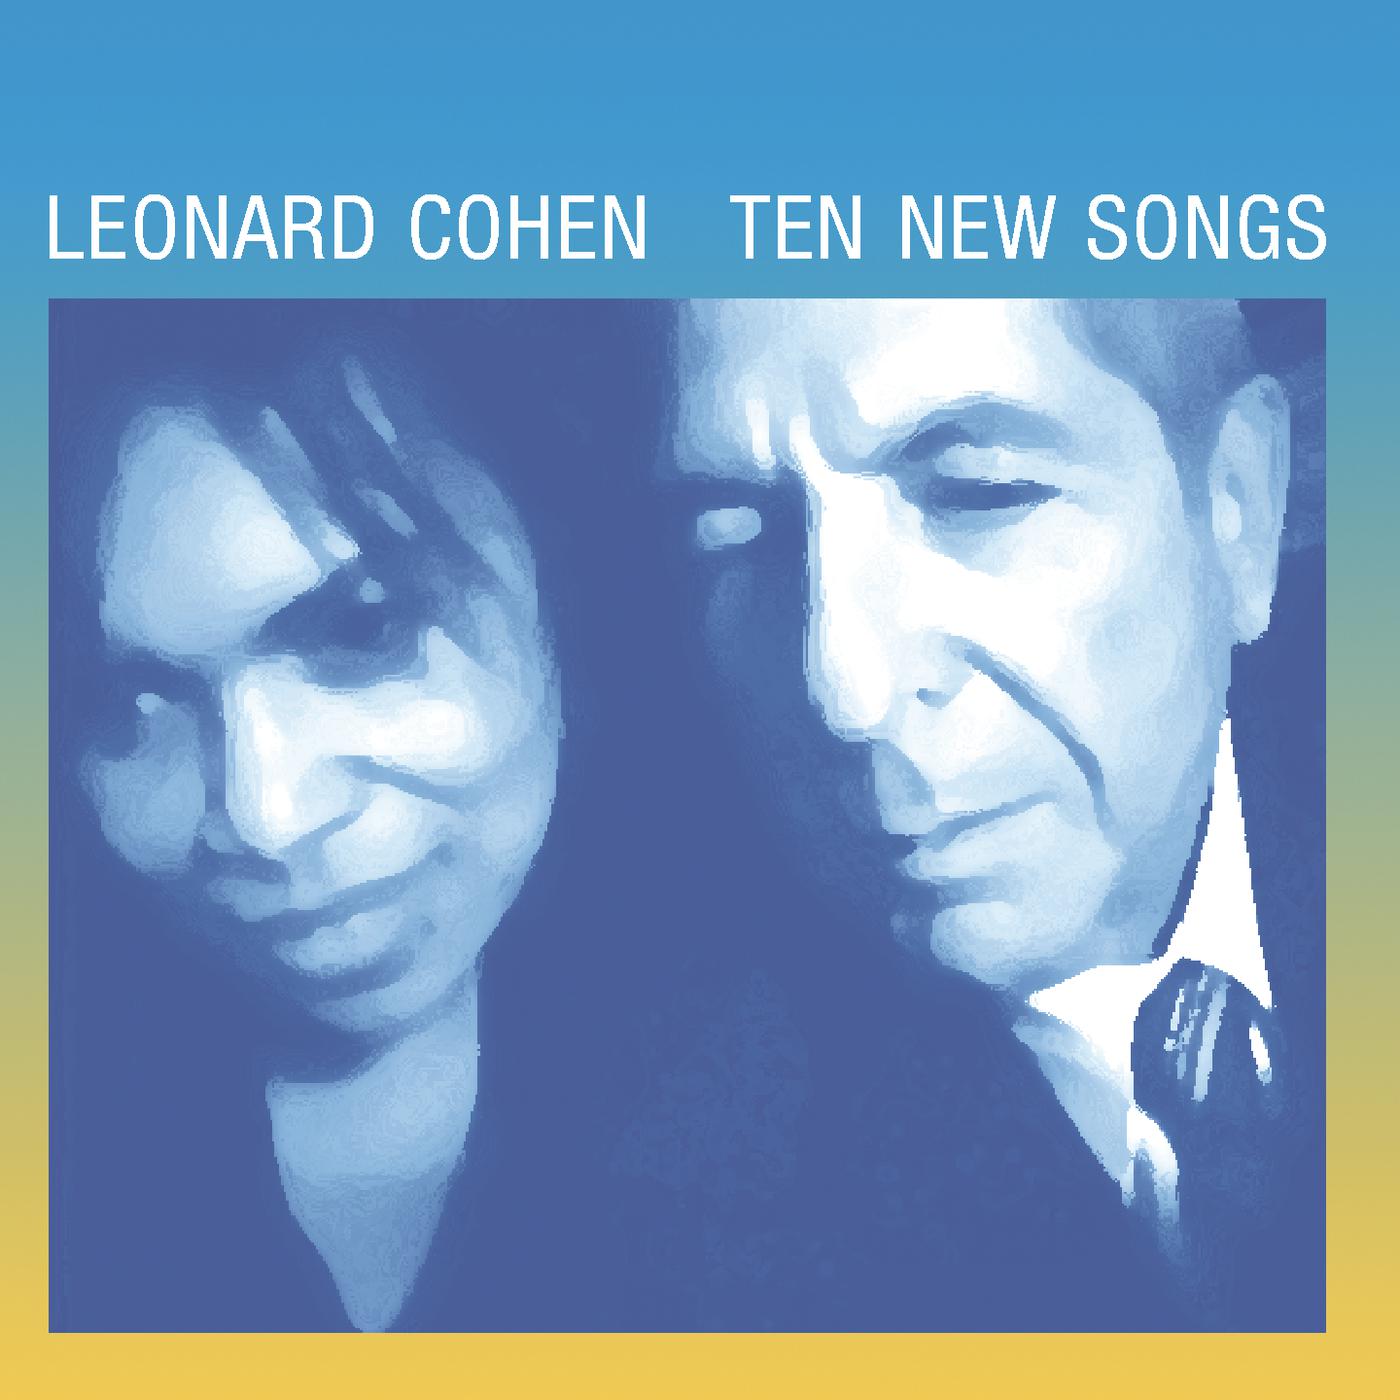 Leonard Cohen - The Land of Plenty